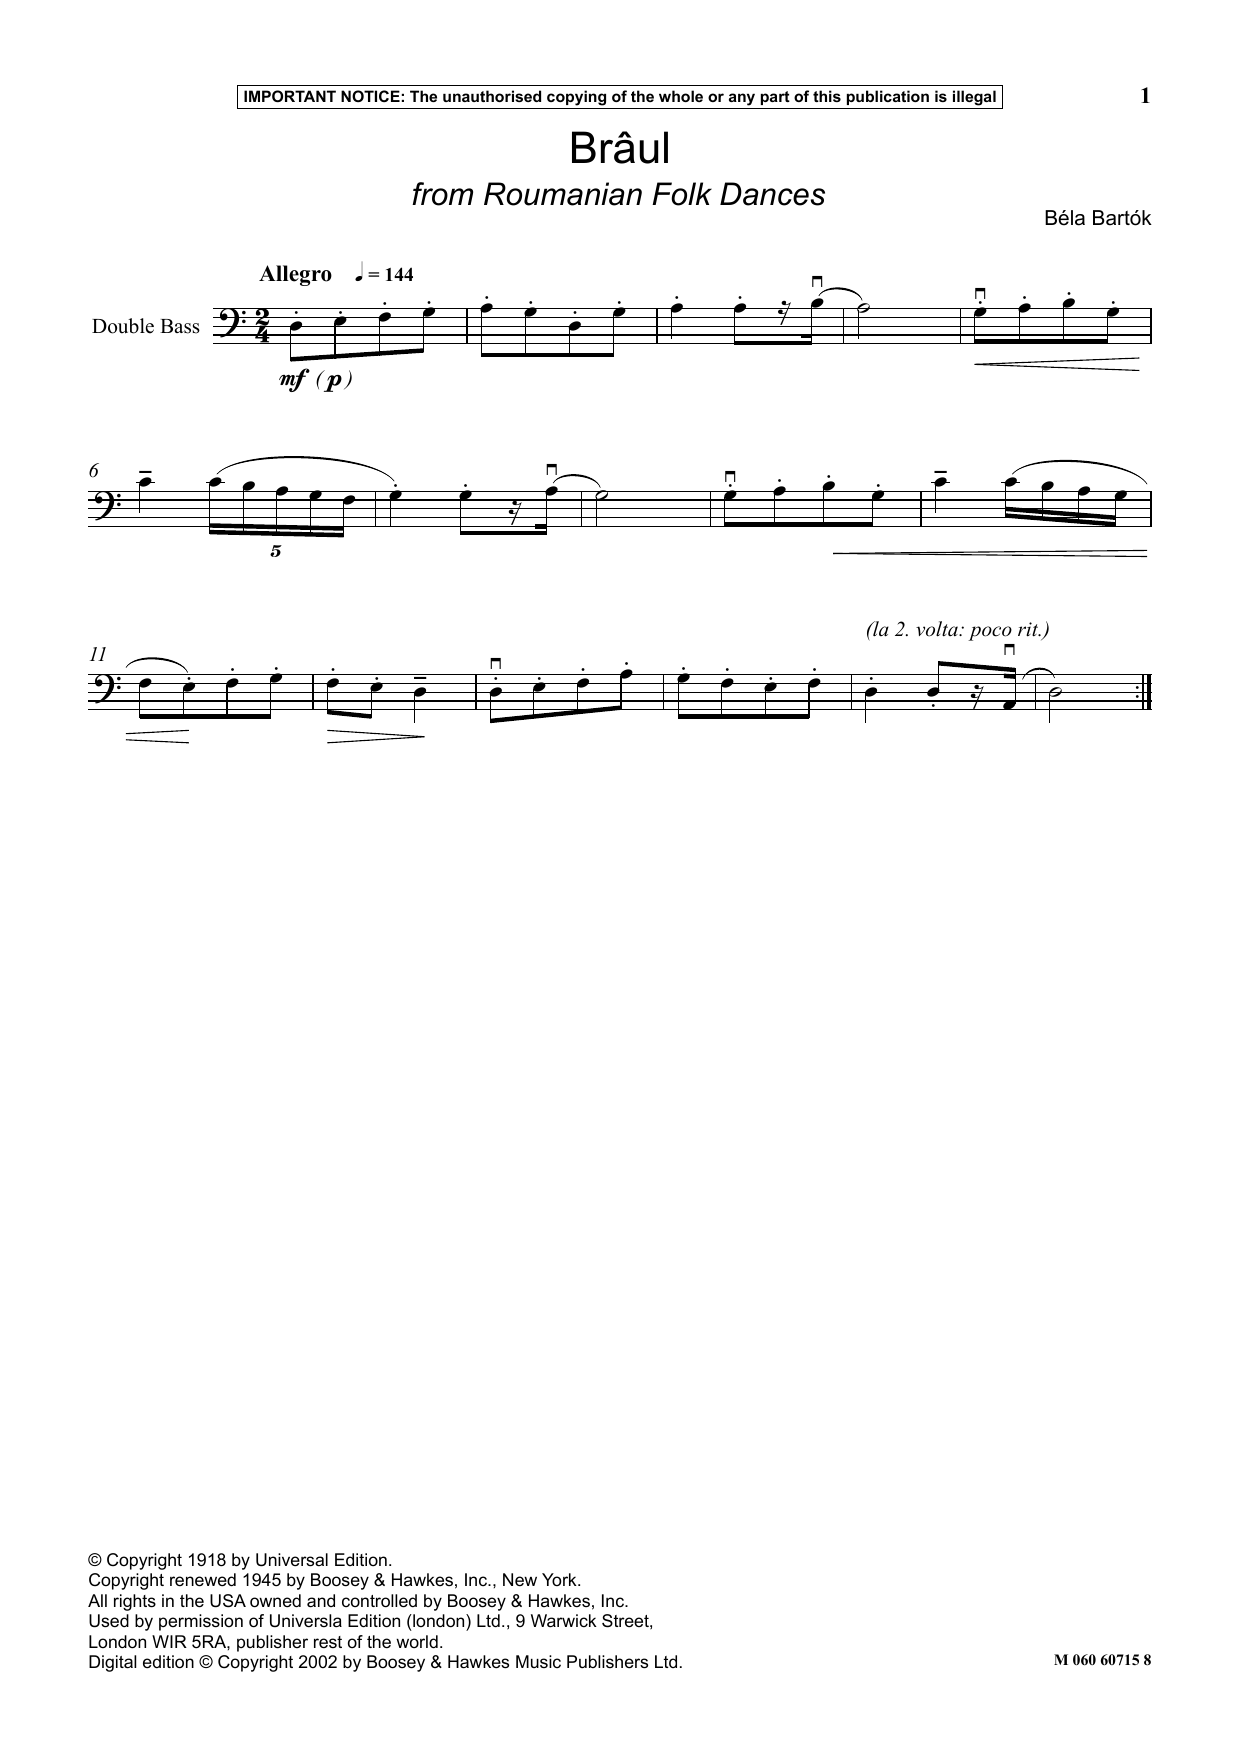 Download Béla Bartók Braul (from Roumanian Folk Dances) Sheet Music